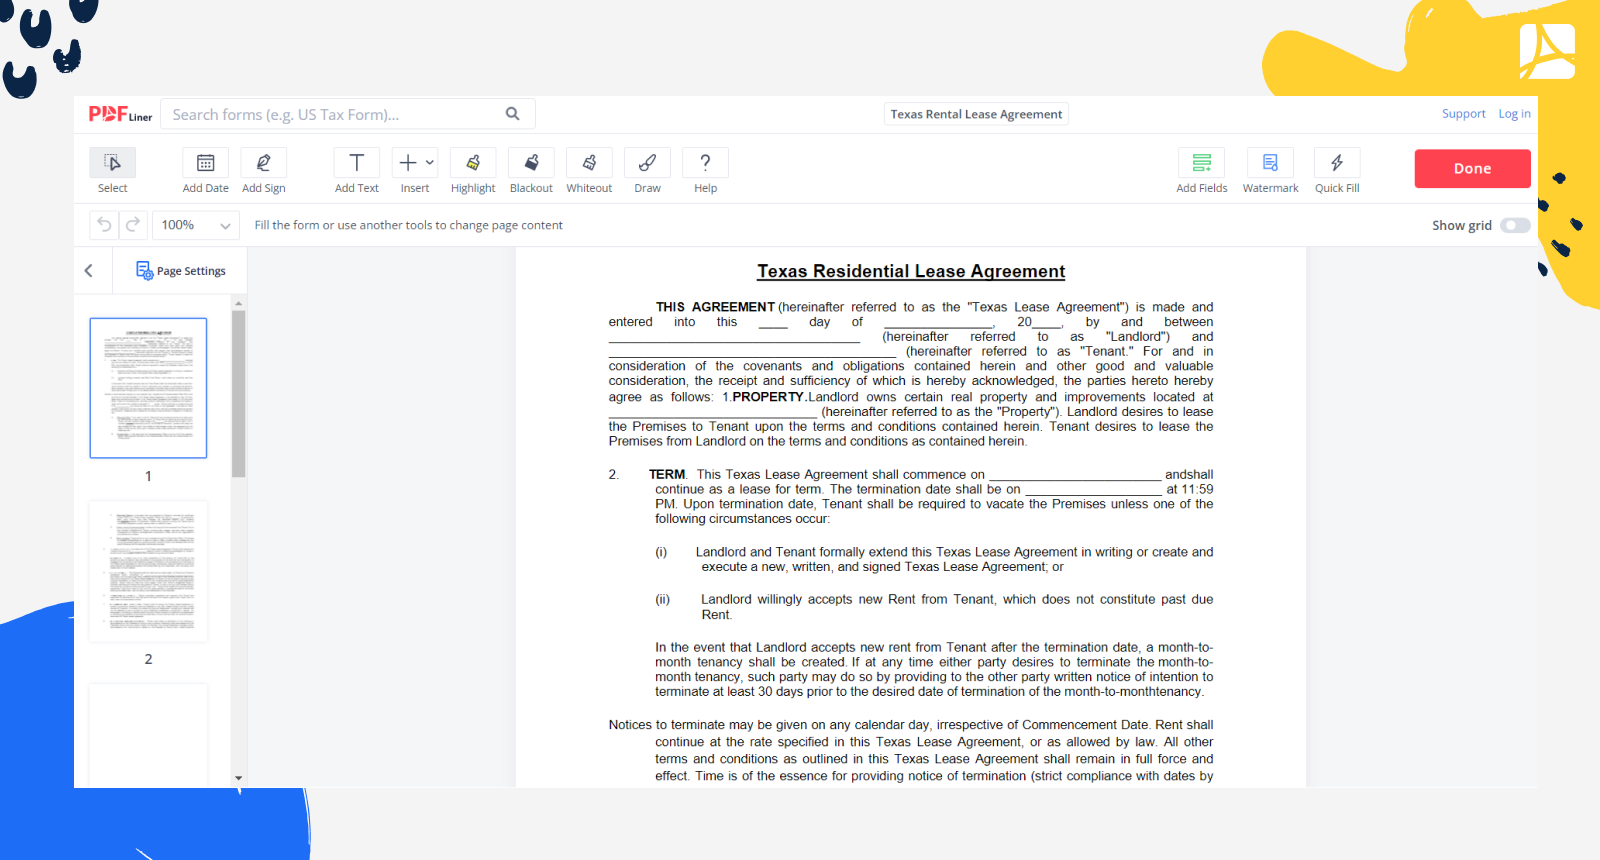 Texas Rental Lease Agreement Form Screenshot